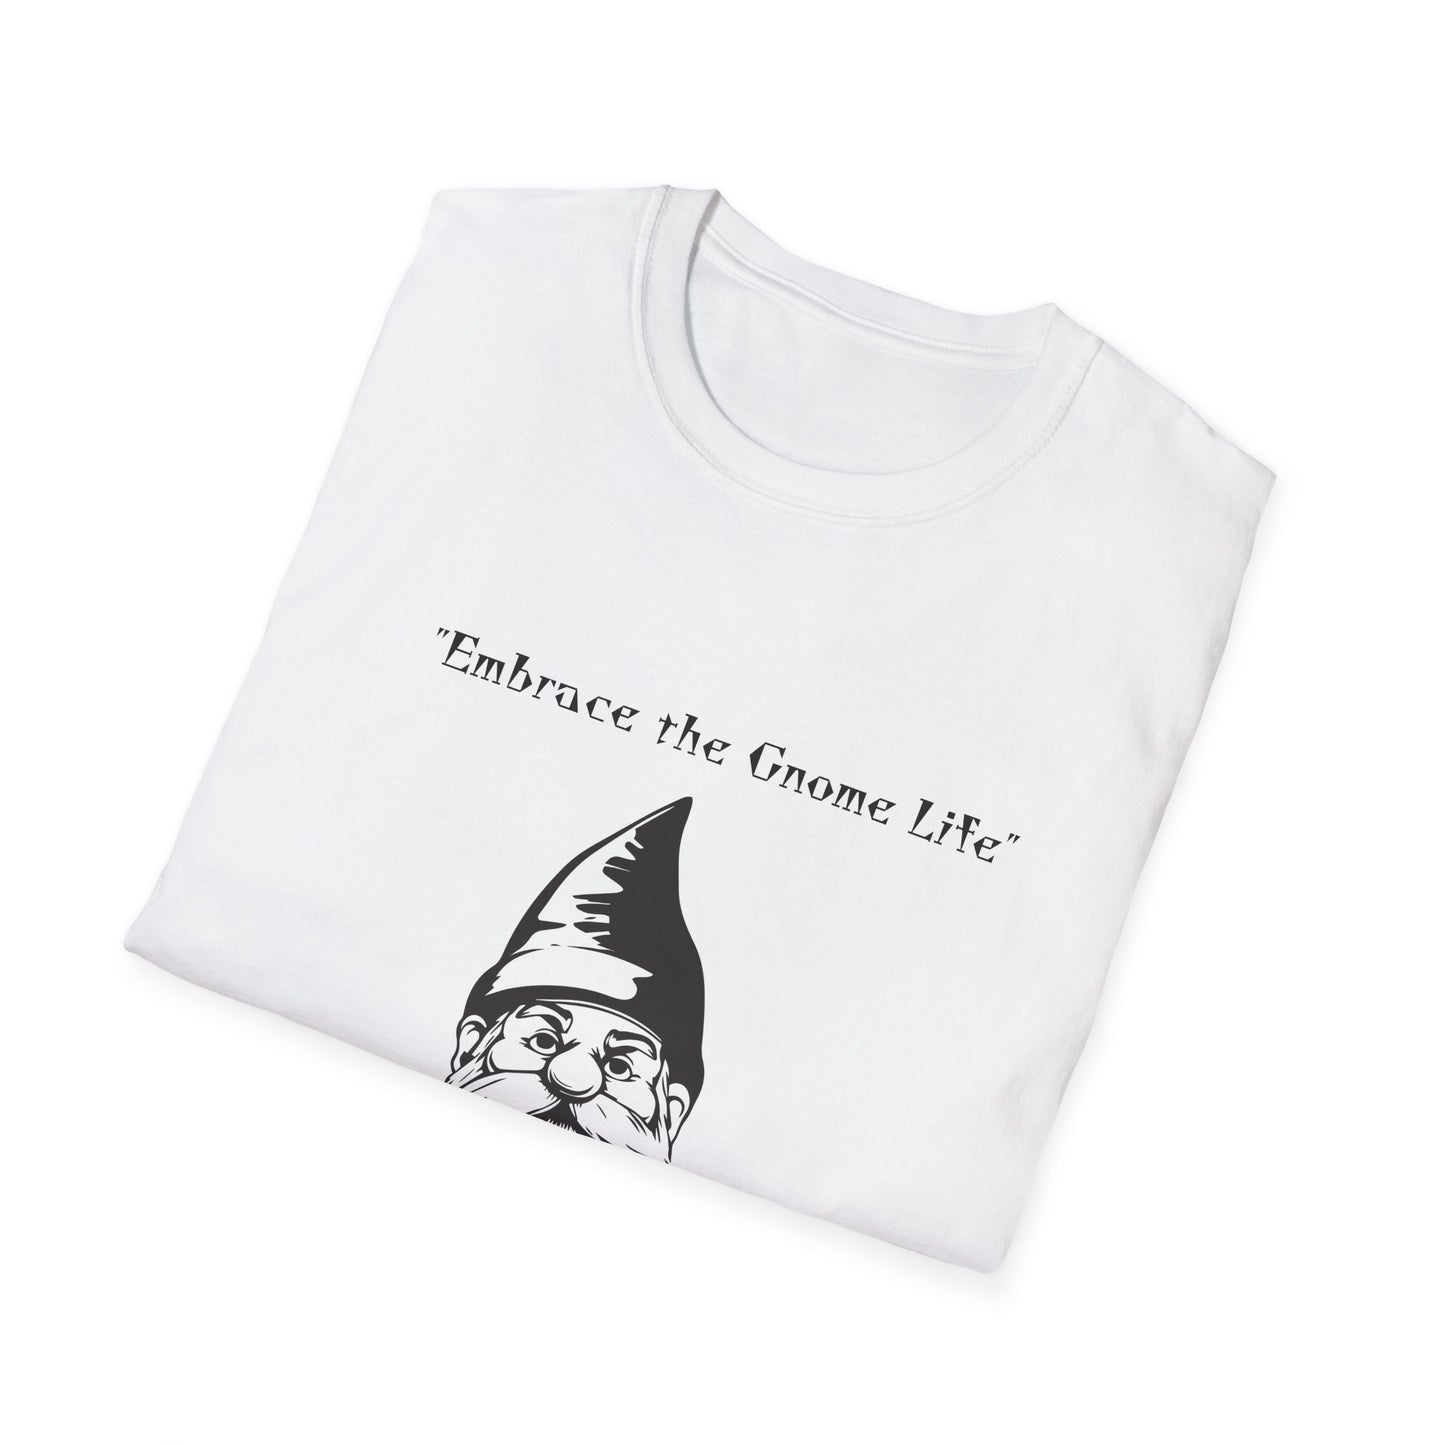 Embrace Gnomelife Softstyle T-Shirt